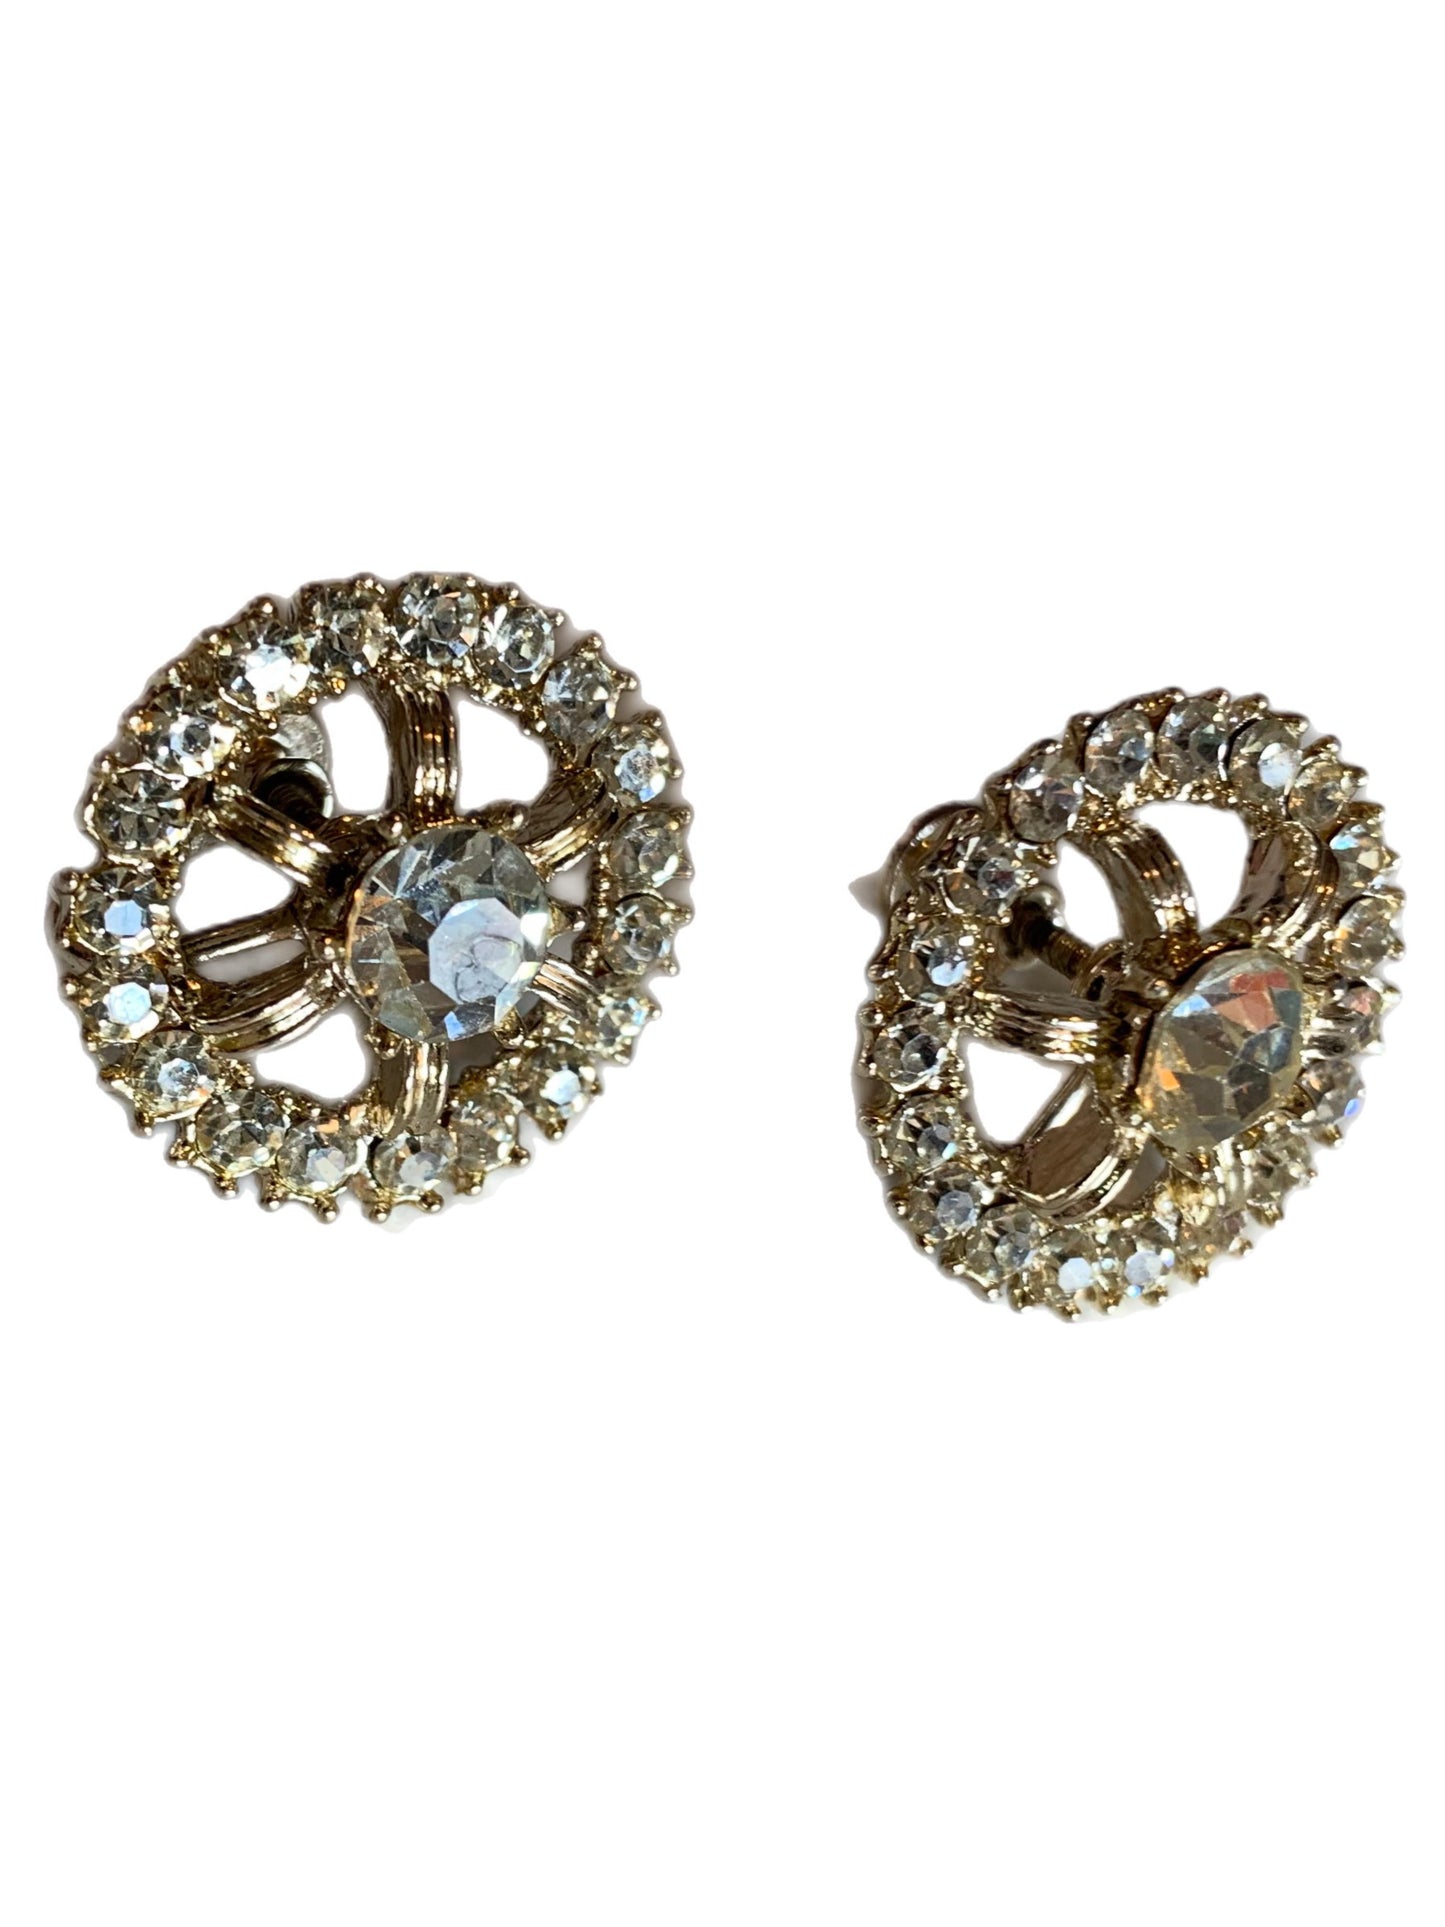 Clear Rhinestone Circle Clip Earrings circa 1960s